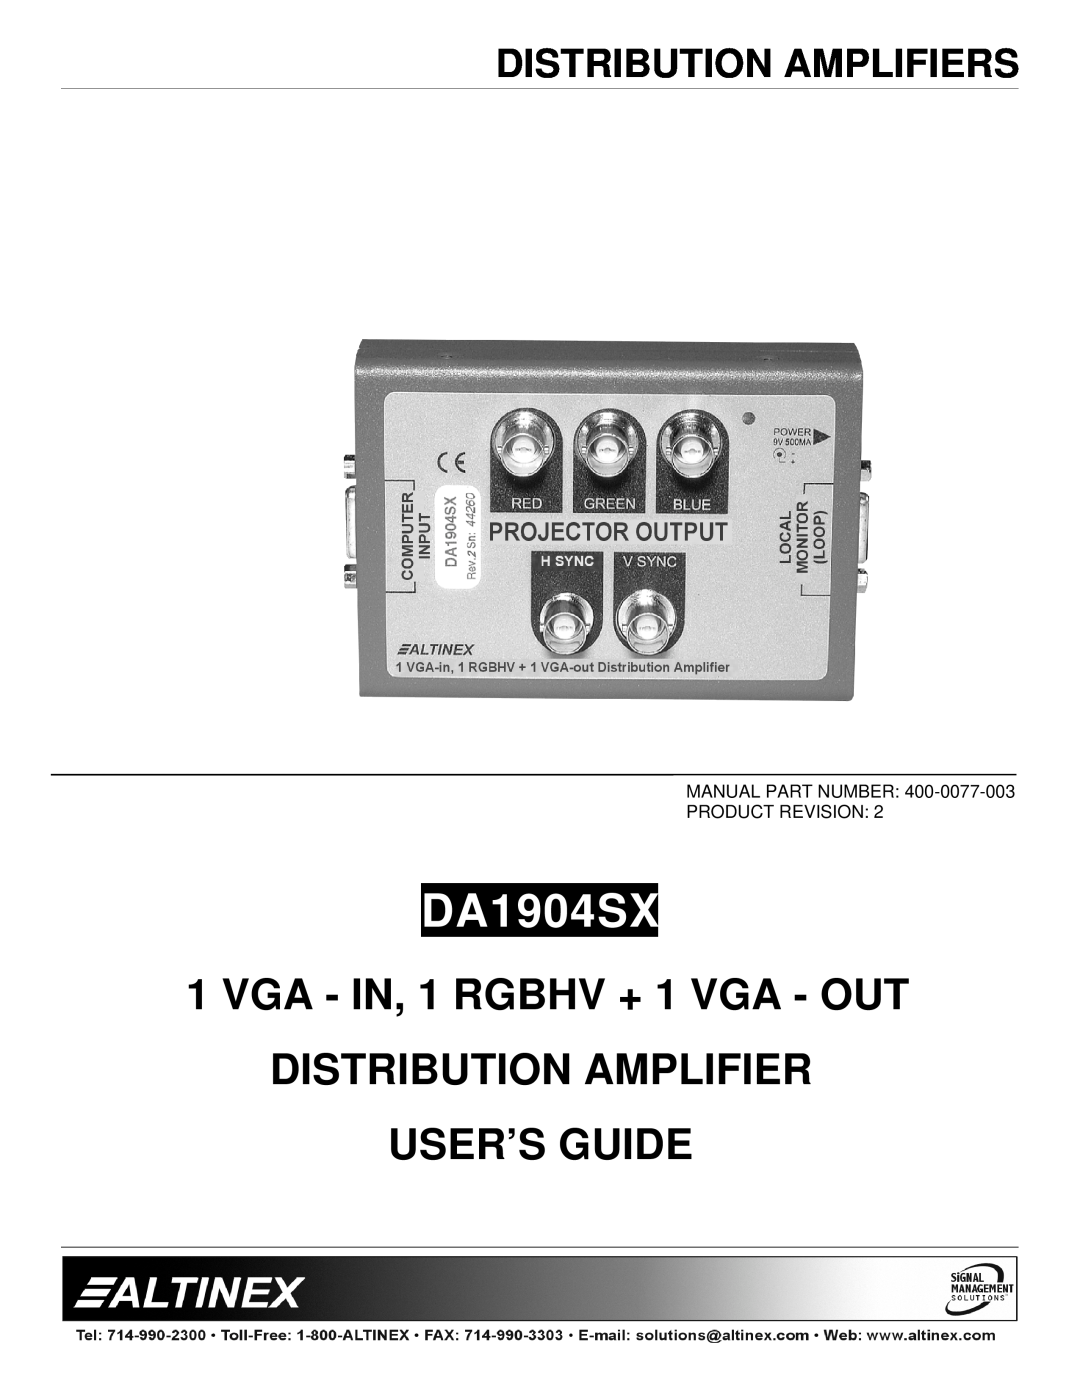 Altinex DA1904SX manual Distribution Amplifiers, VGA - IN, 1 RGBHV + 1 VGA - OUT, Distribution Amplifier User’S Guide 